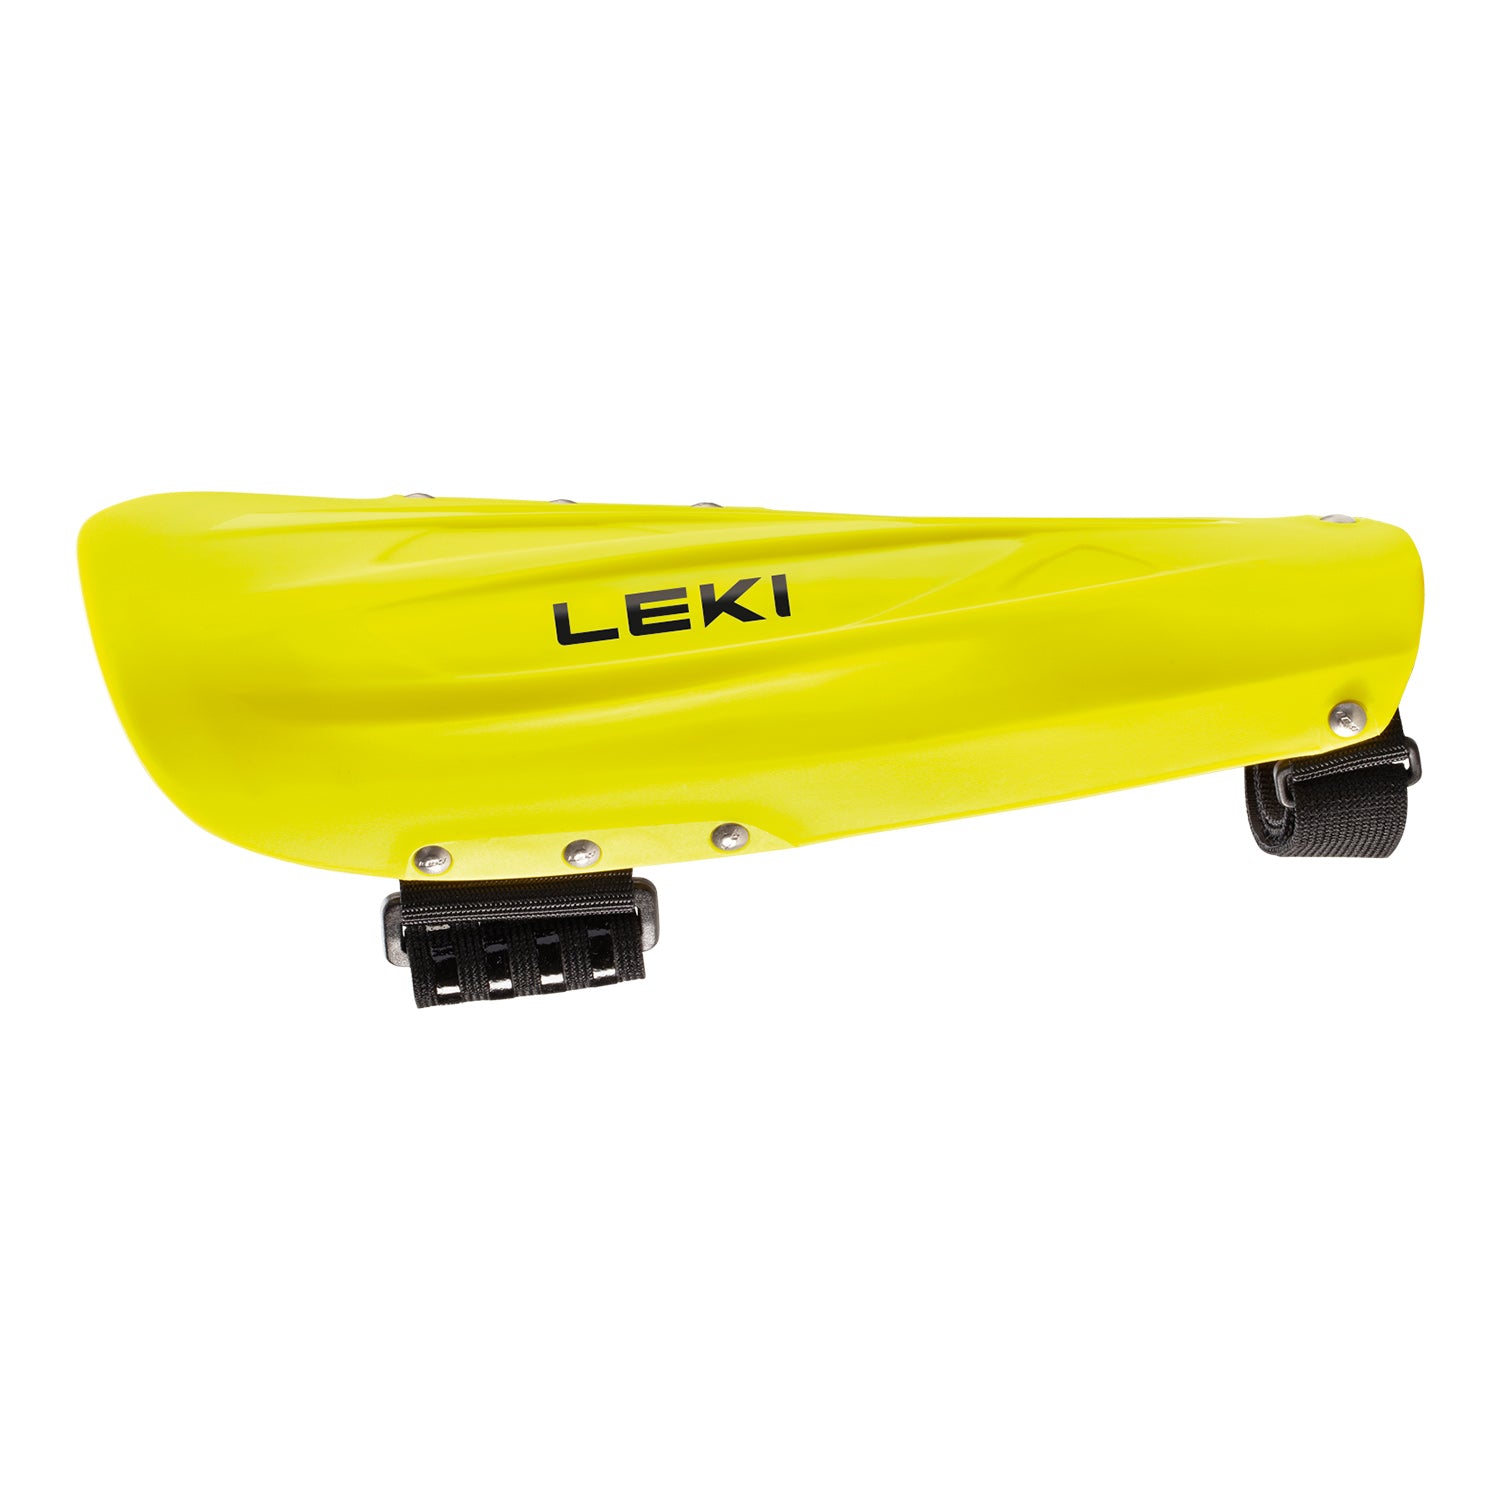 LEKI USA - FOREARM GUARD (BLACK) - Ski Protectors - Products